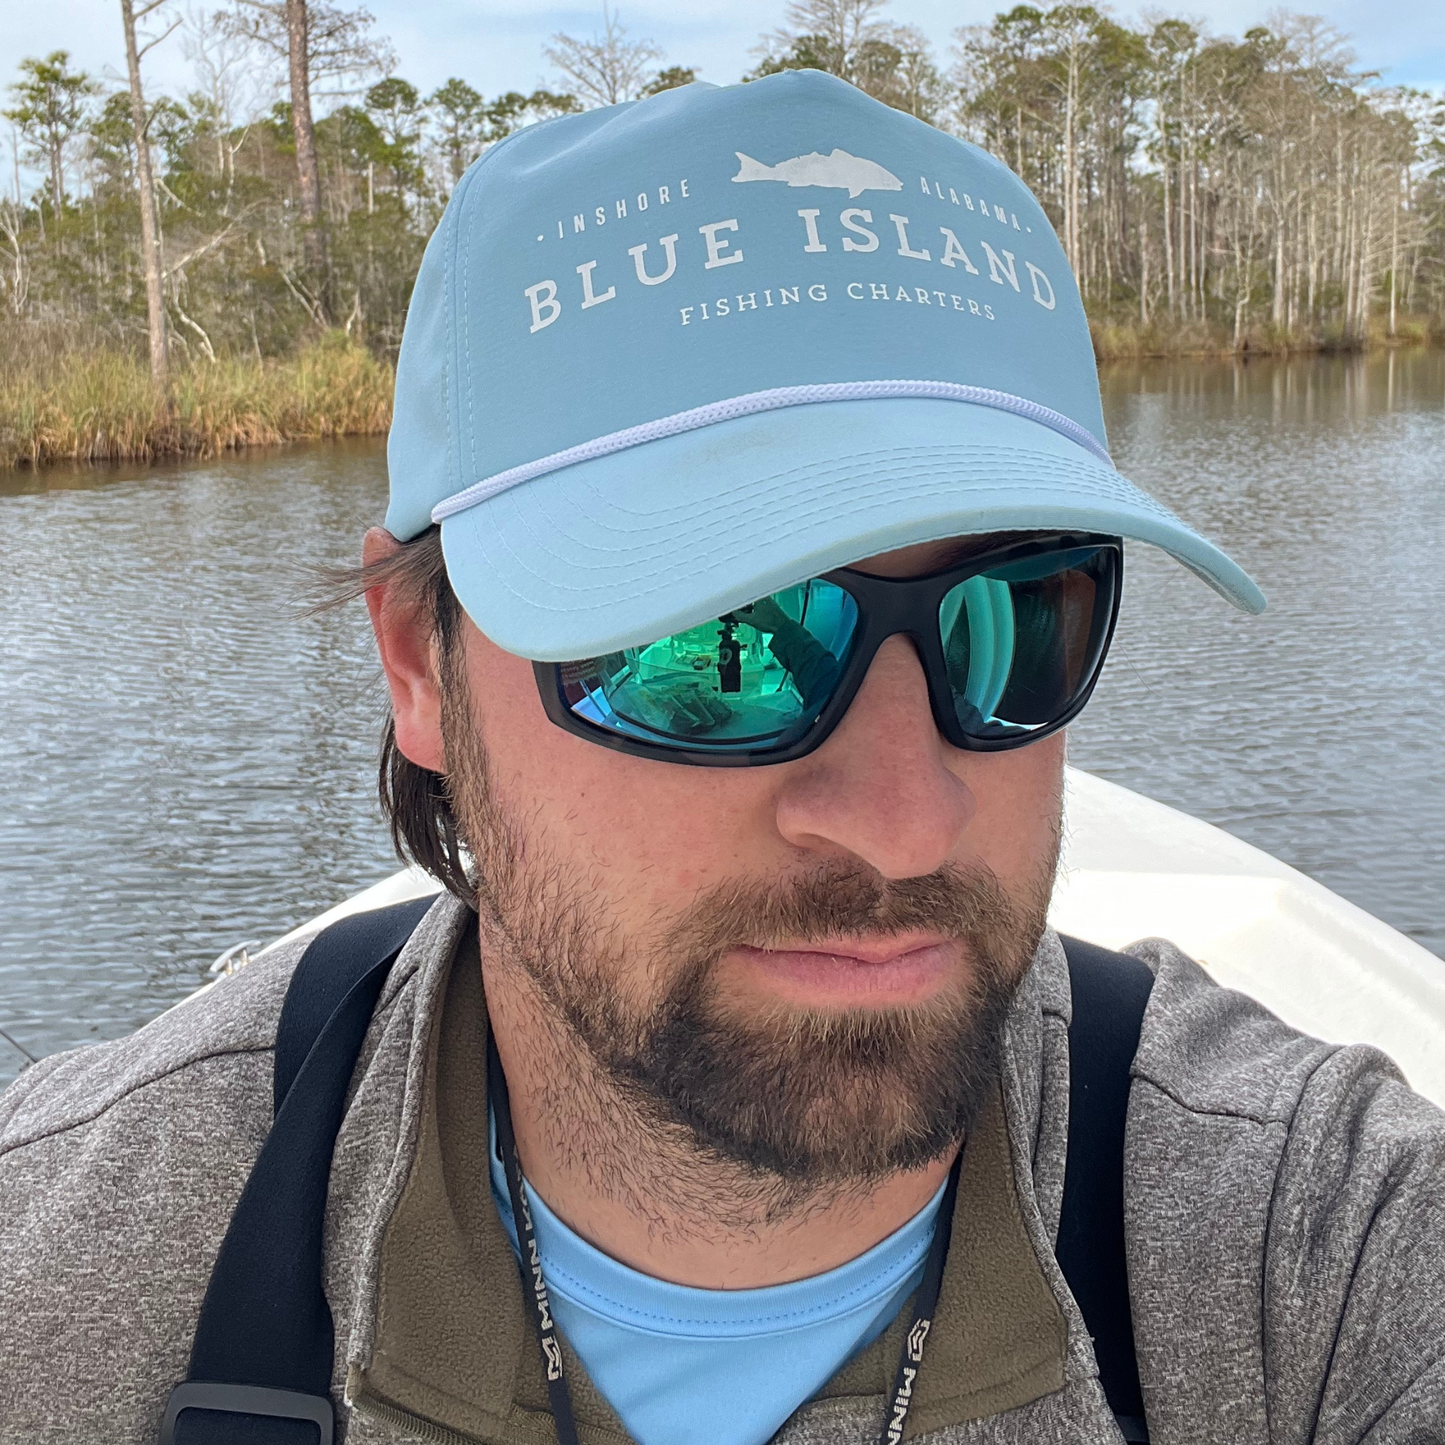 Blue Island Nylon Rope Hat